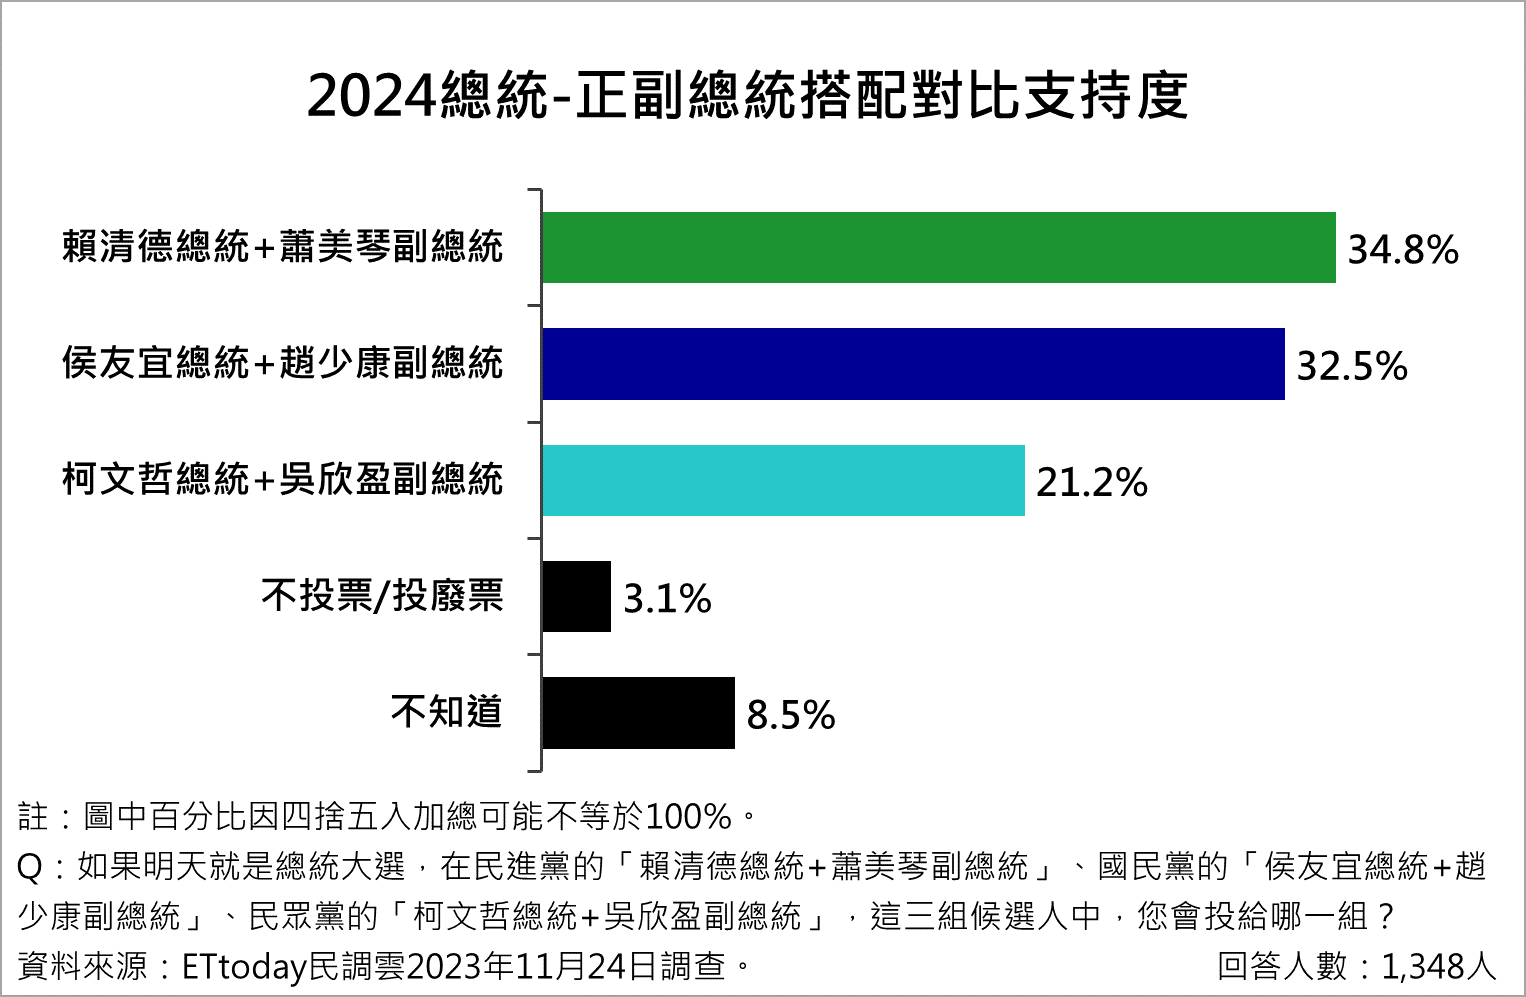 Re: [新聞] ET民調／「侯康」支持度32.5%猛追「賴蕭